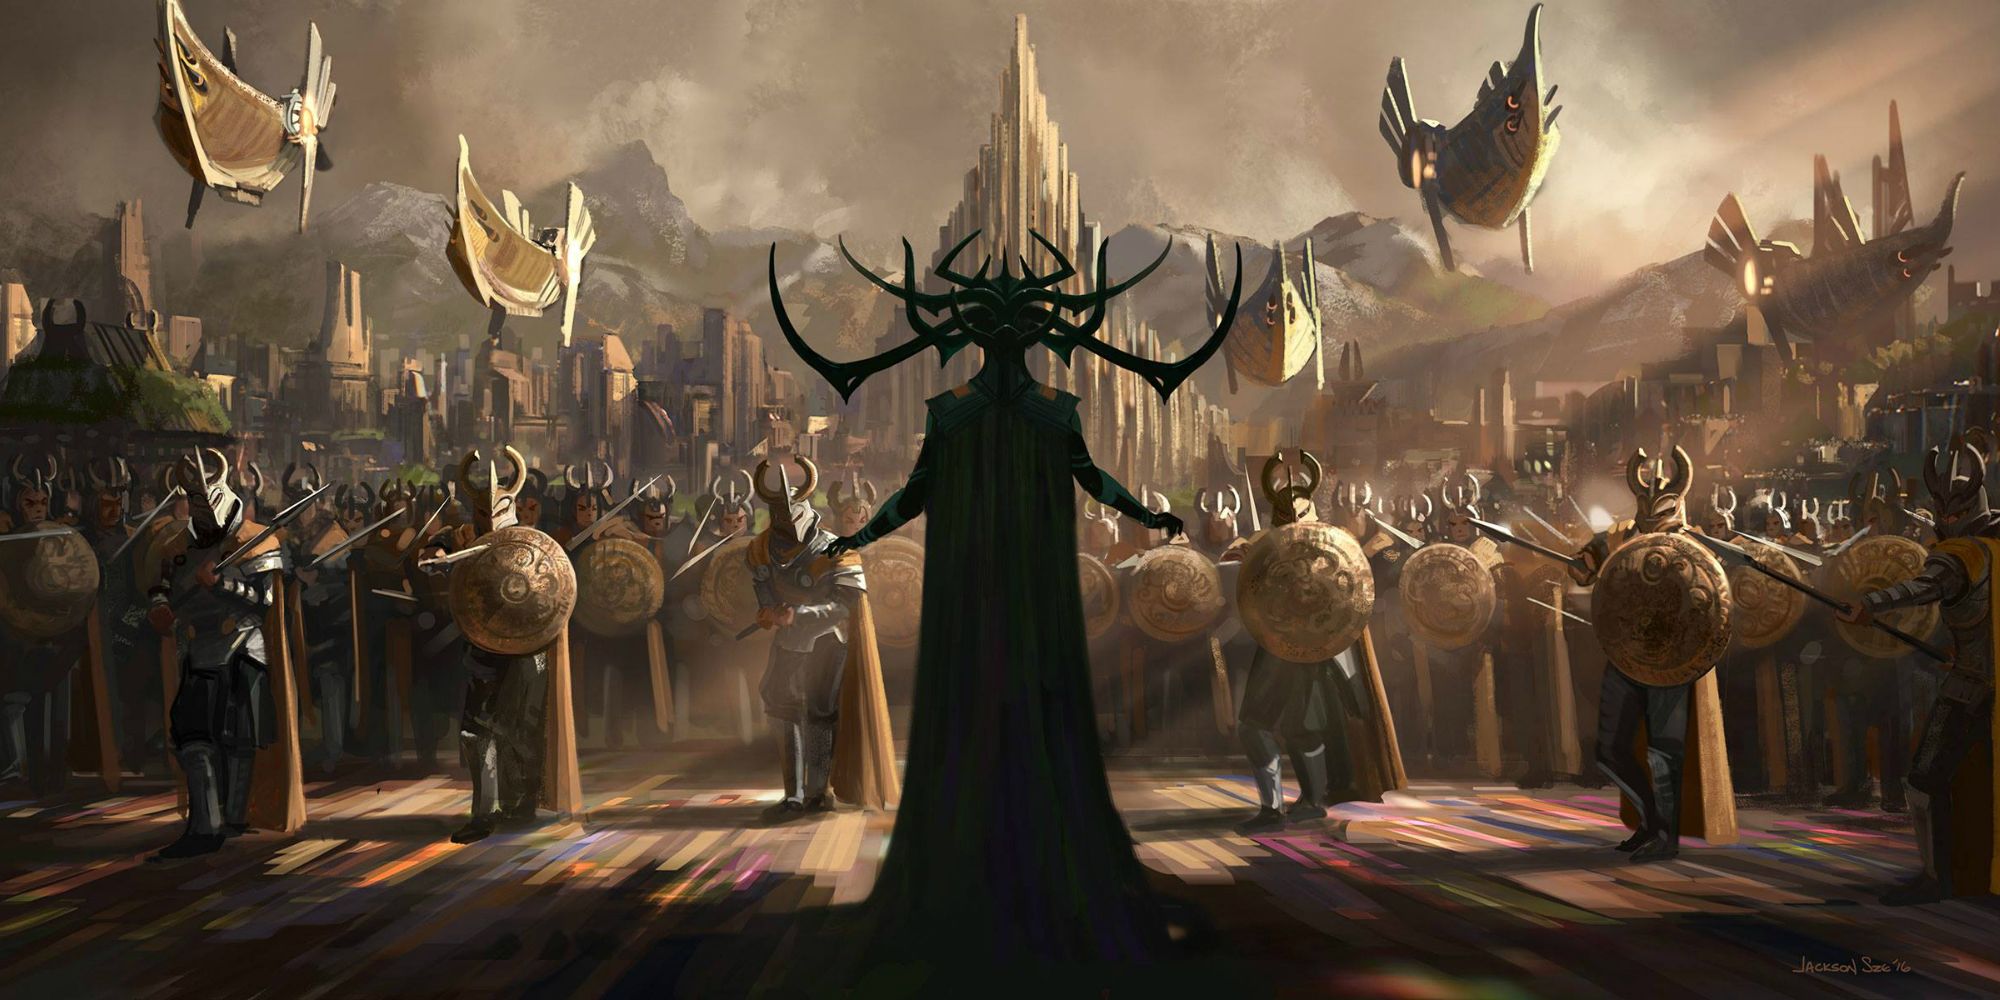 Hela concept art for Thor Ragnarok